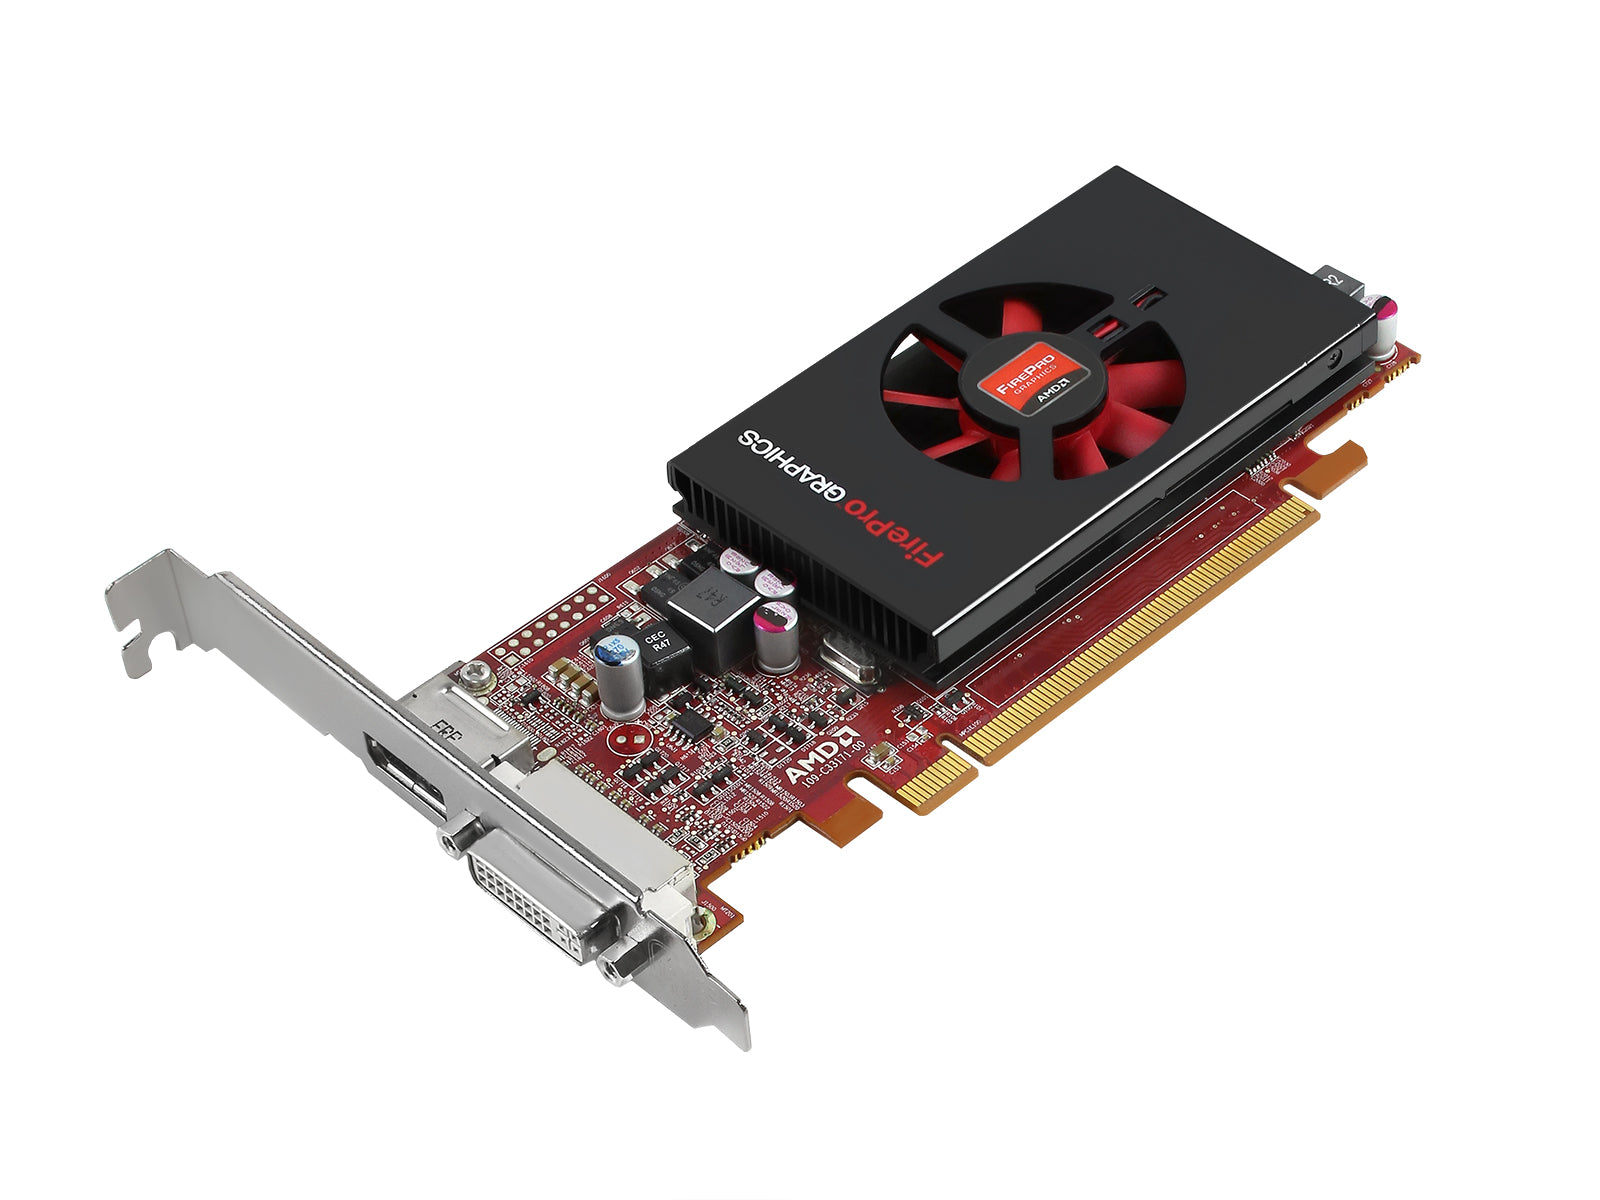 Barco MXRT-2500 1GB PCIe Graphic Card (K9306035) Monitors.com 